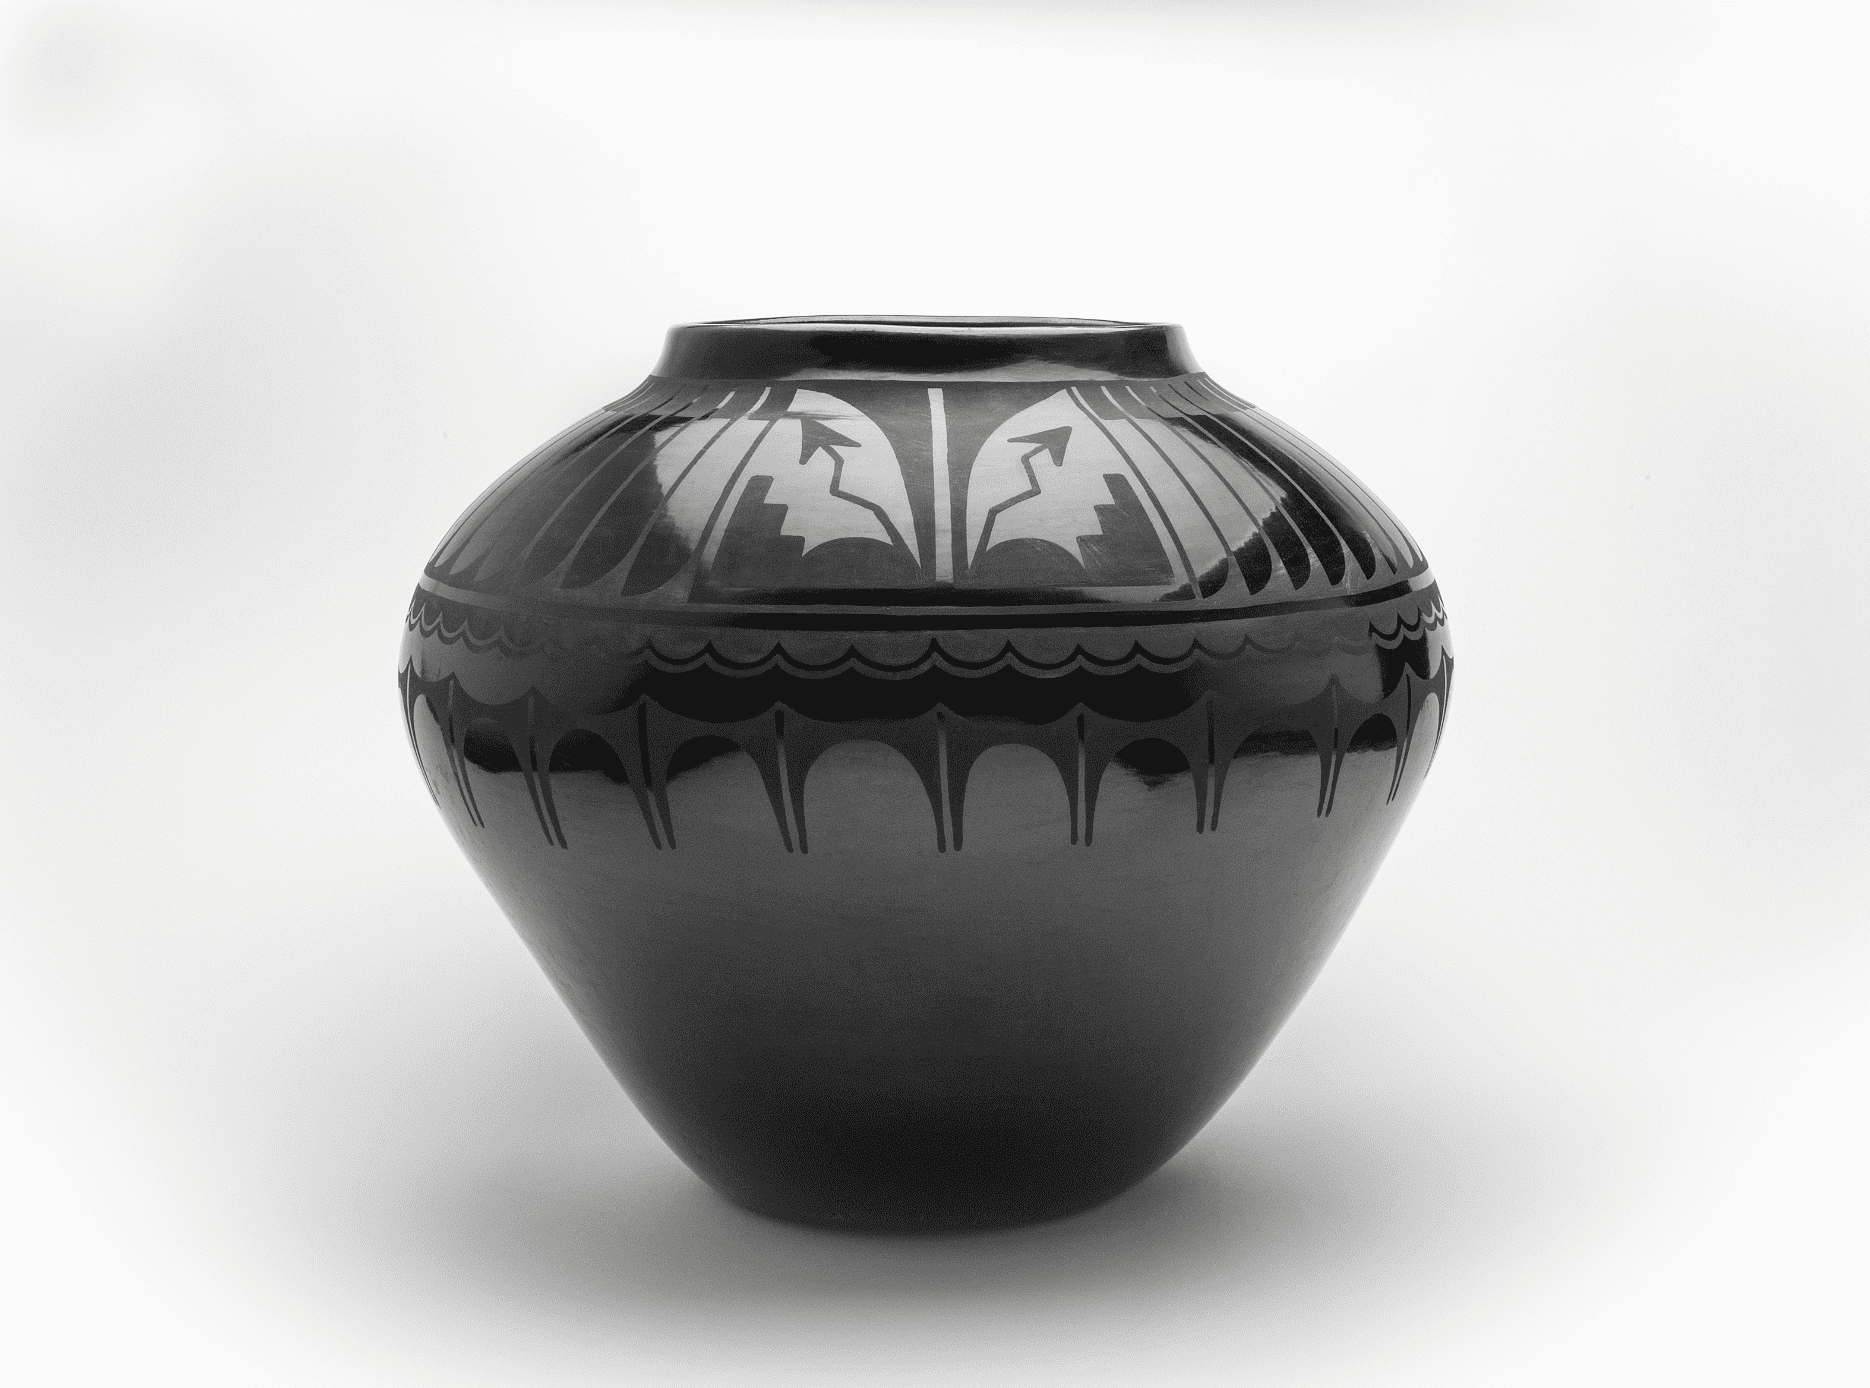 A black vase on a white background.